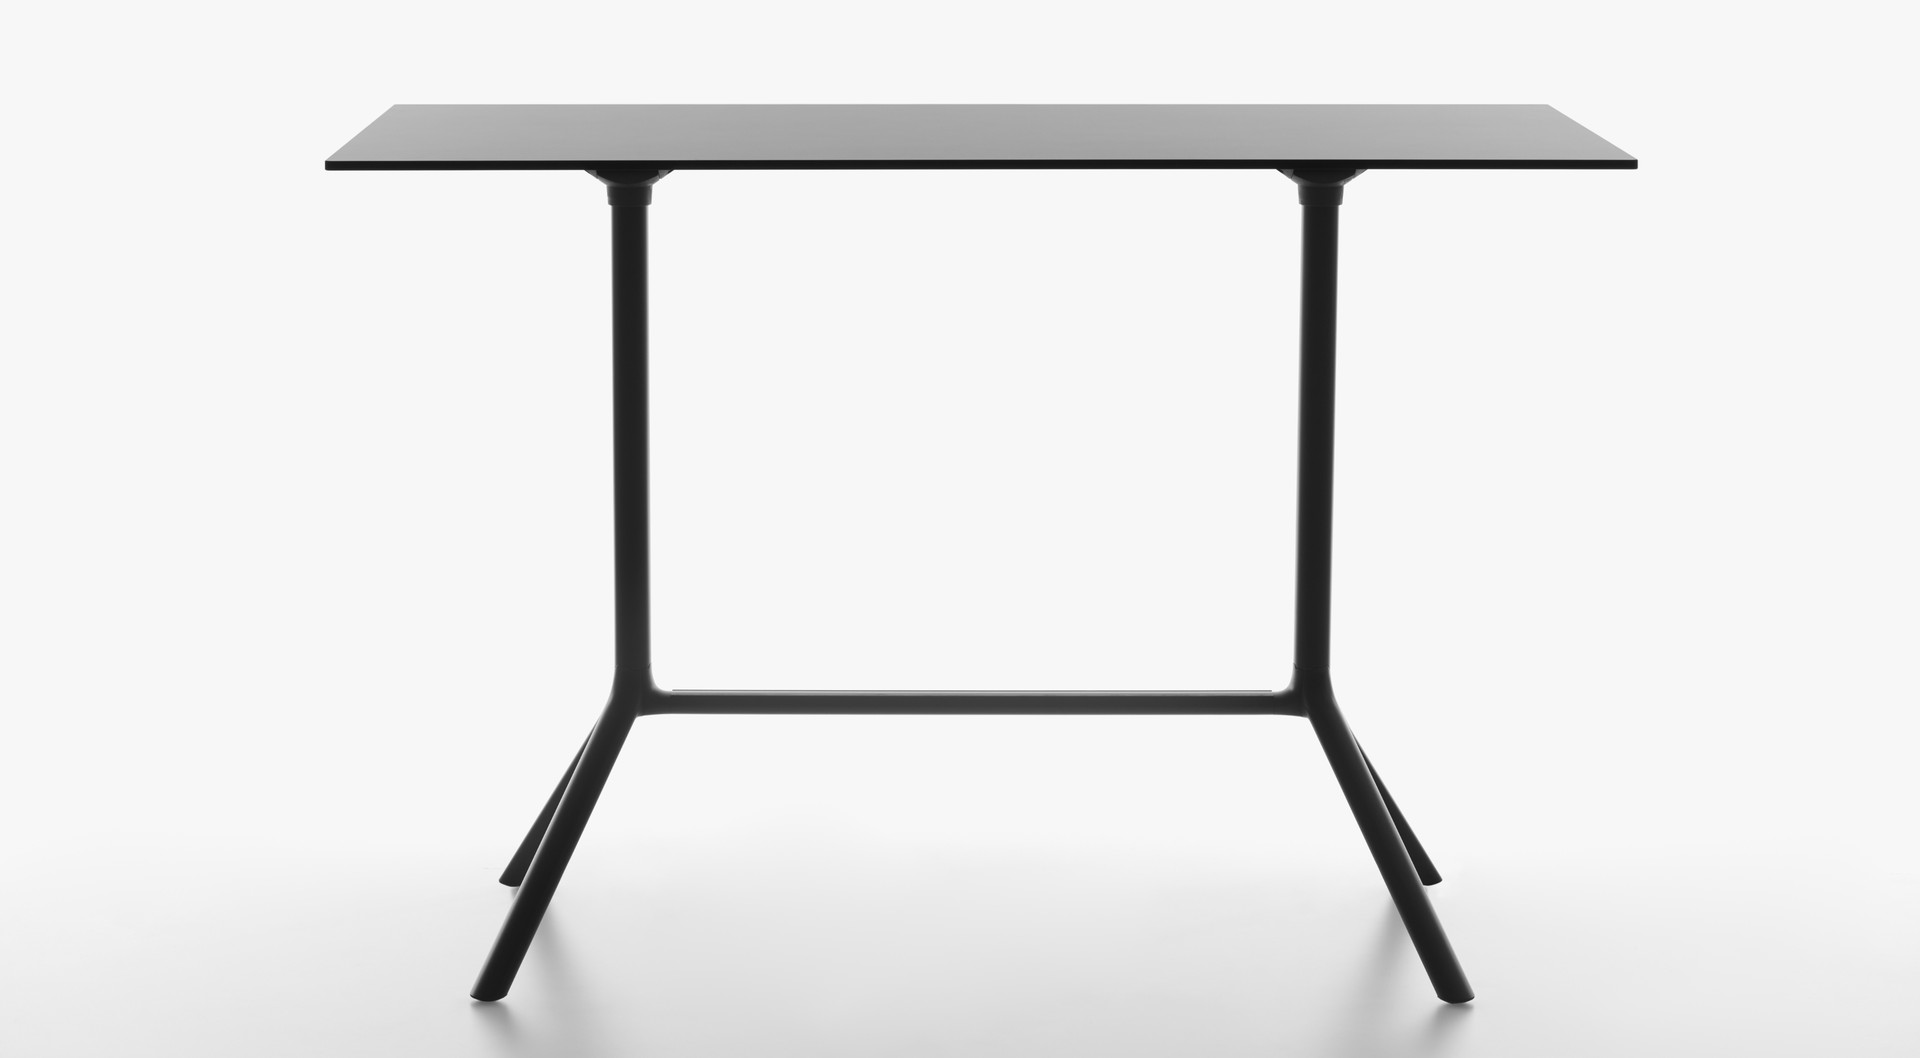 Plank - MIURA table rectangular table top, 103 cm high, black